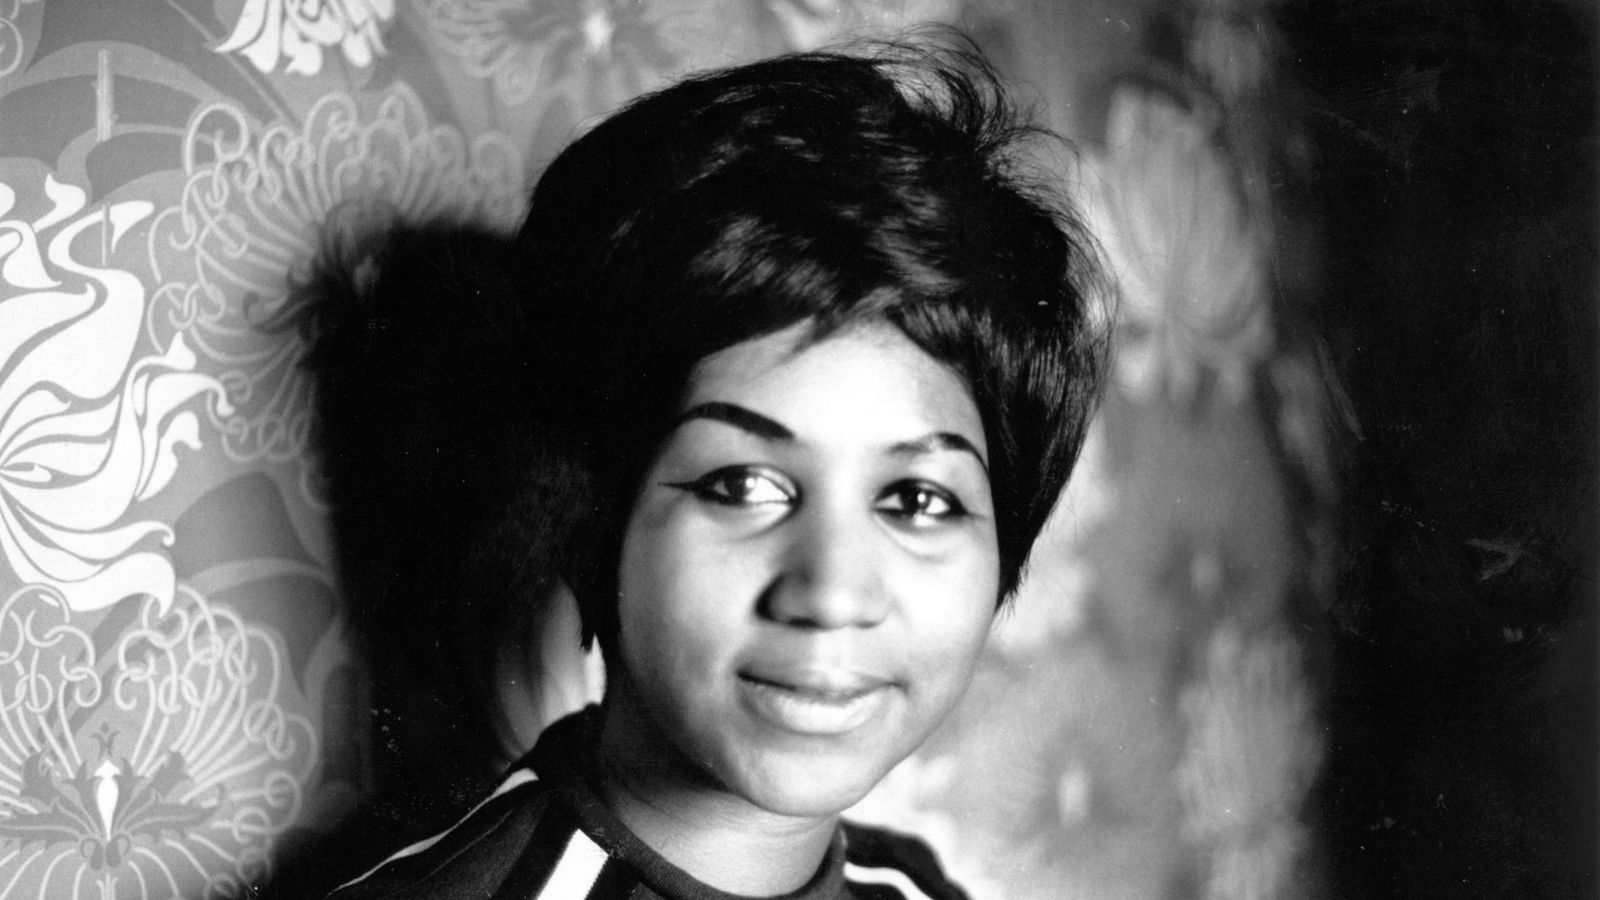 Aretha Franklin: Soul singer endured tumultuous childhood to